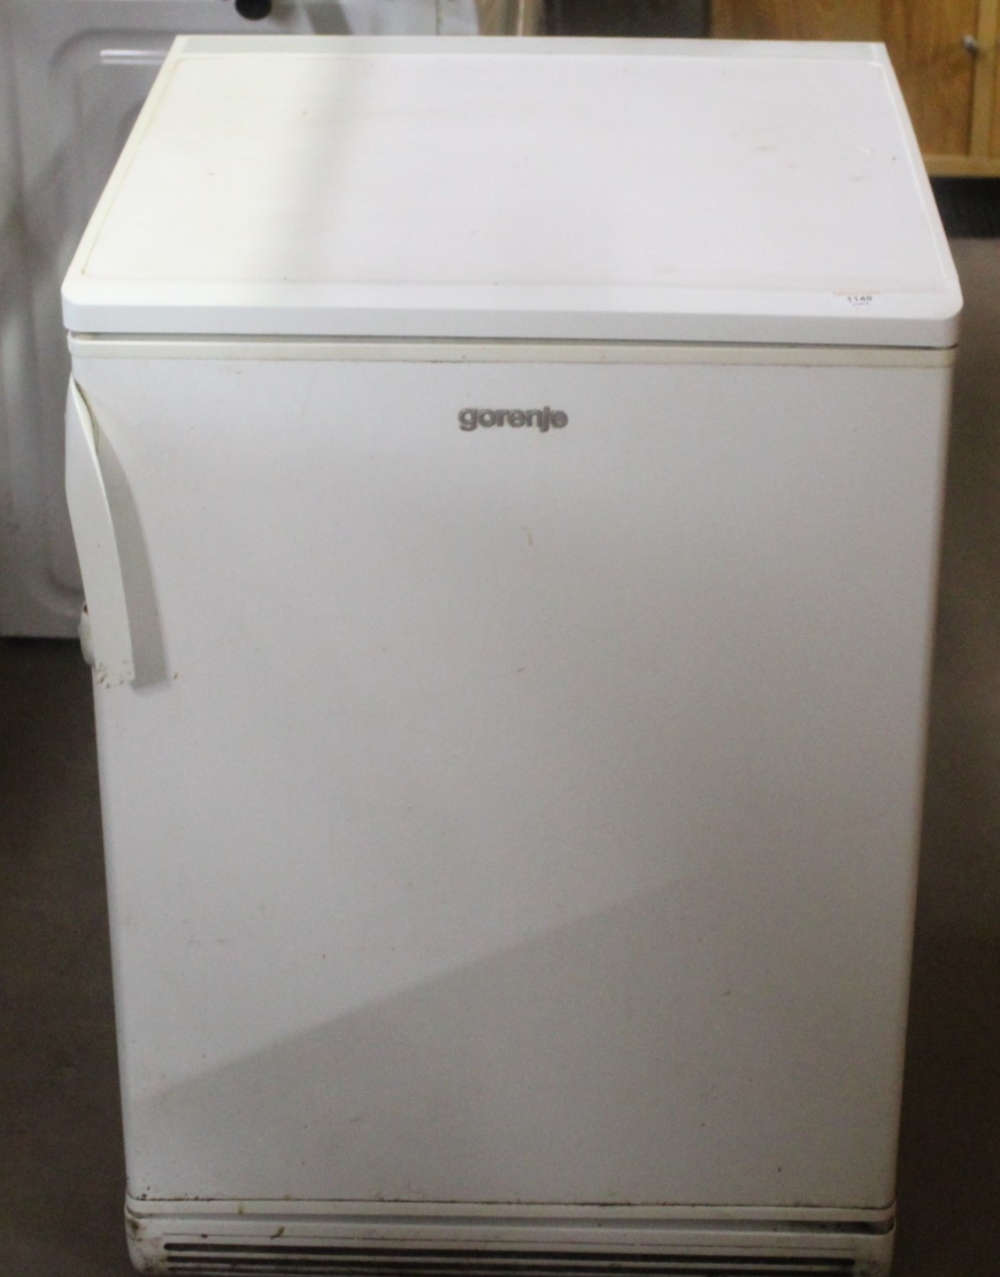 A Gorenje under-counter fridge. 84 cm